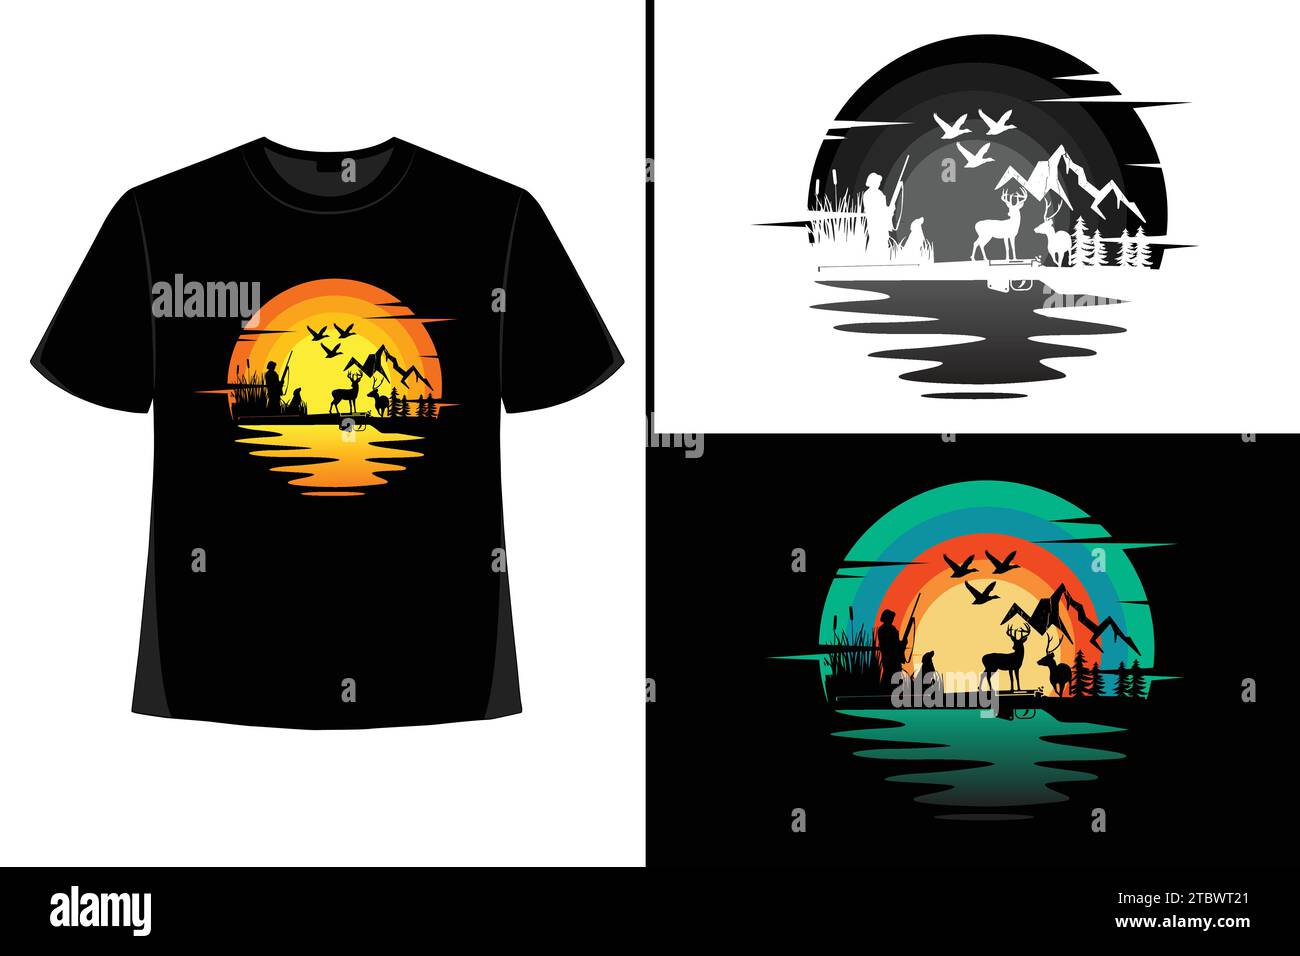 American Grunge Fishing T-shirt Design Vector Download